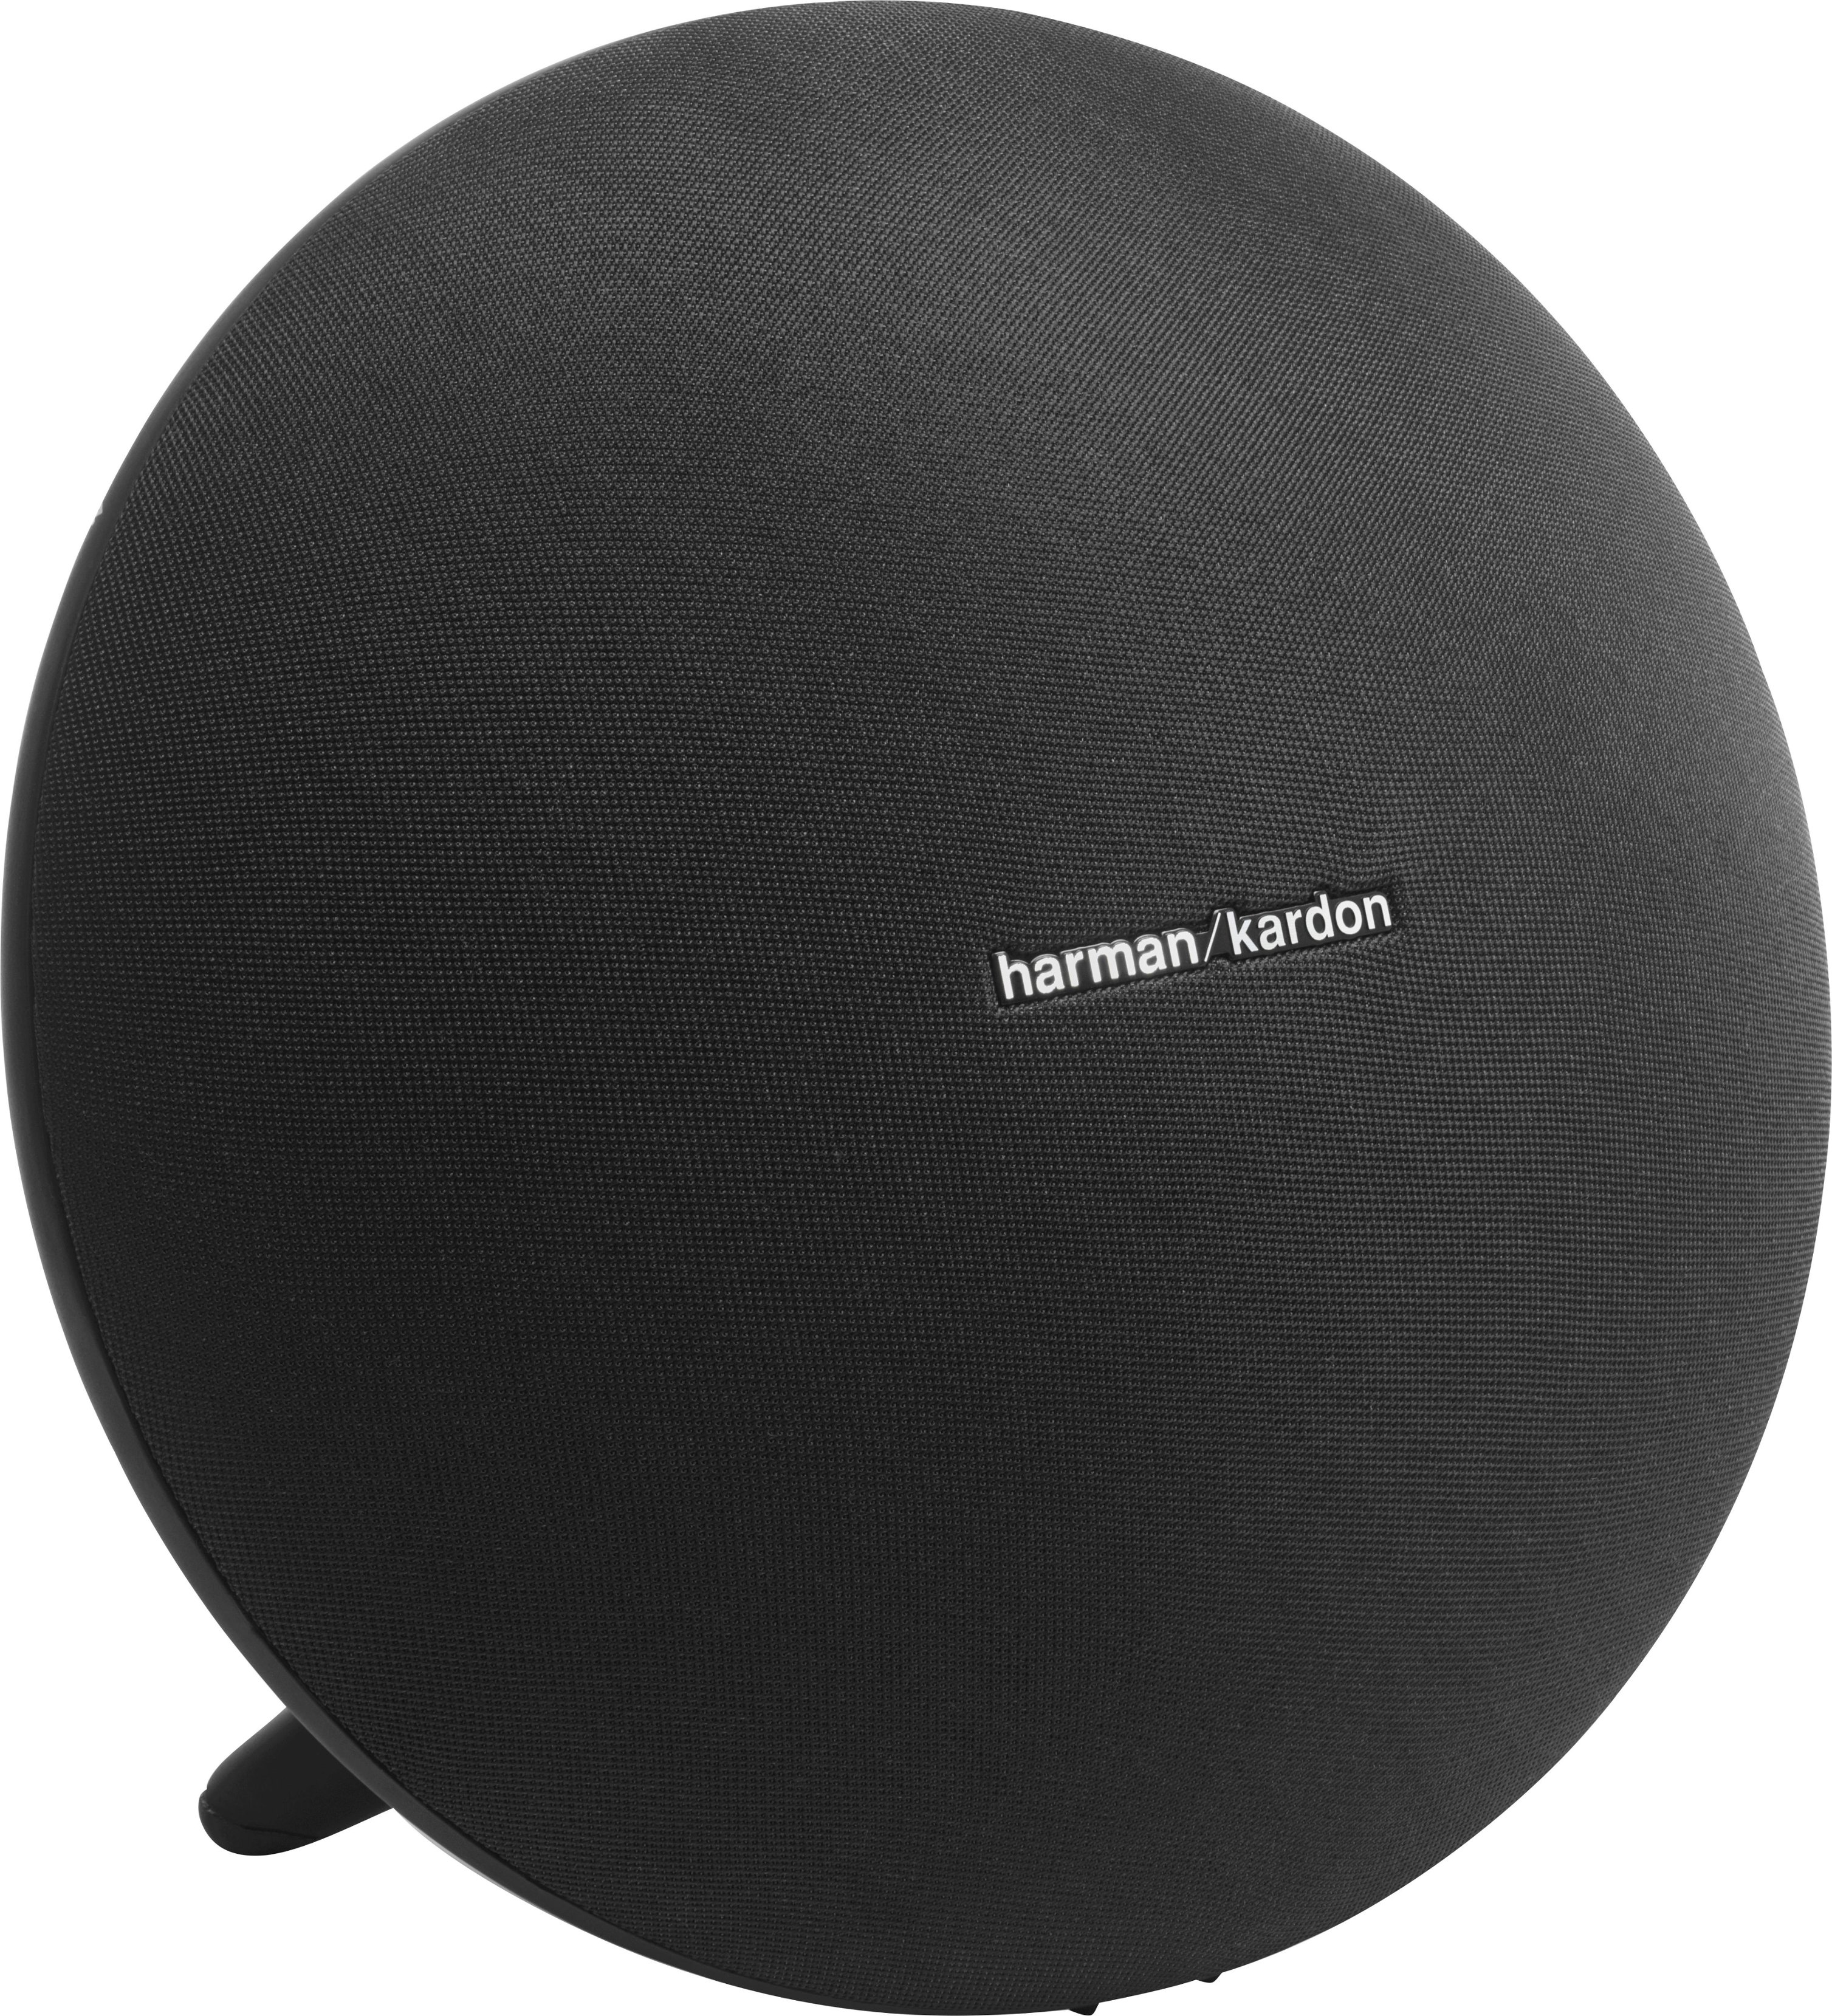 Portable Buy: 4 harman/kardon Studio Best Onyx Speaker Black HKOS4BLKAM Bluetooth